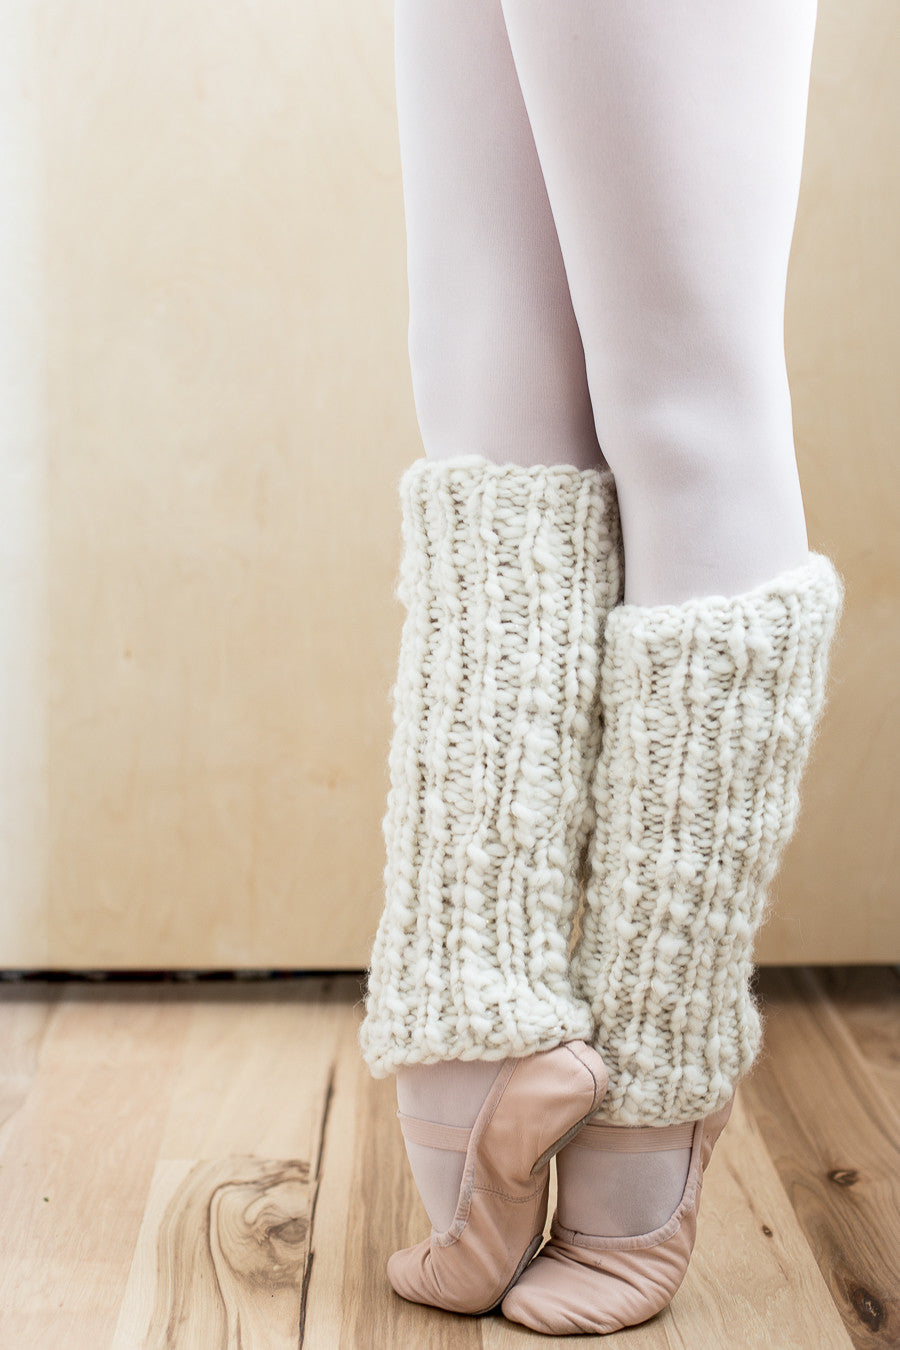 Swedish Wool leg warmers